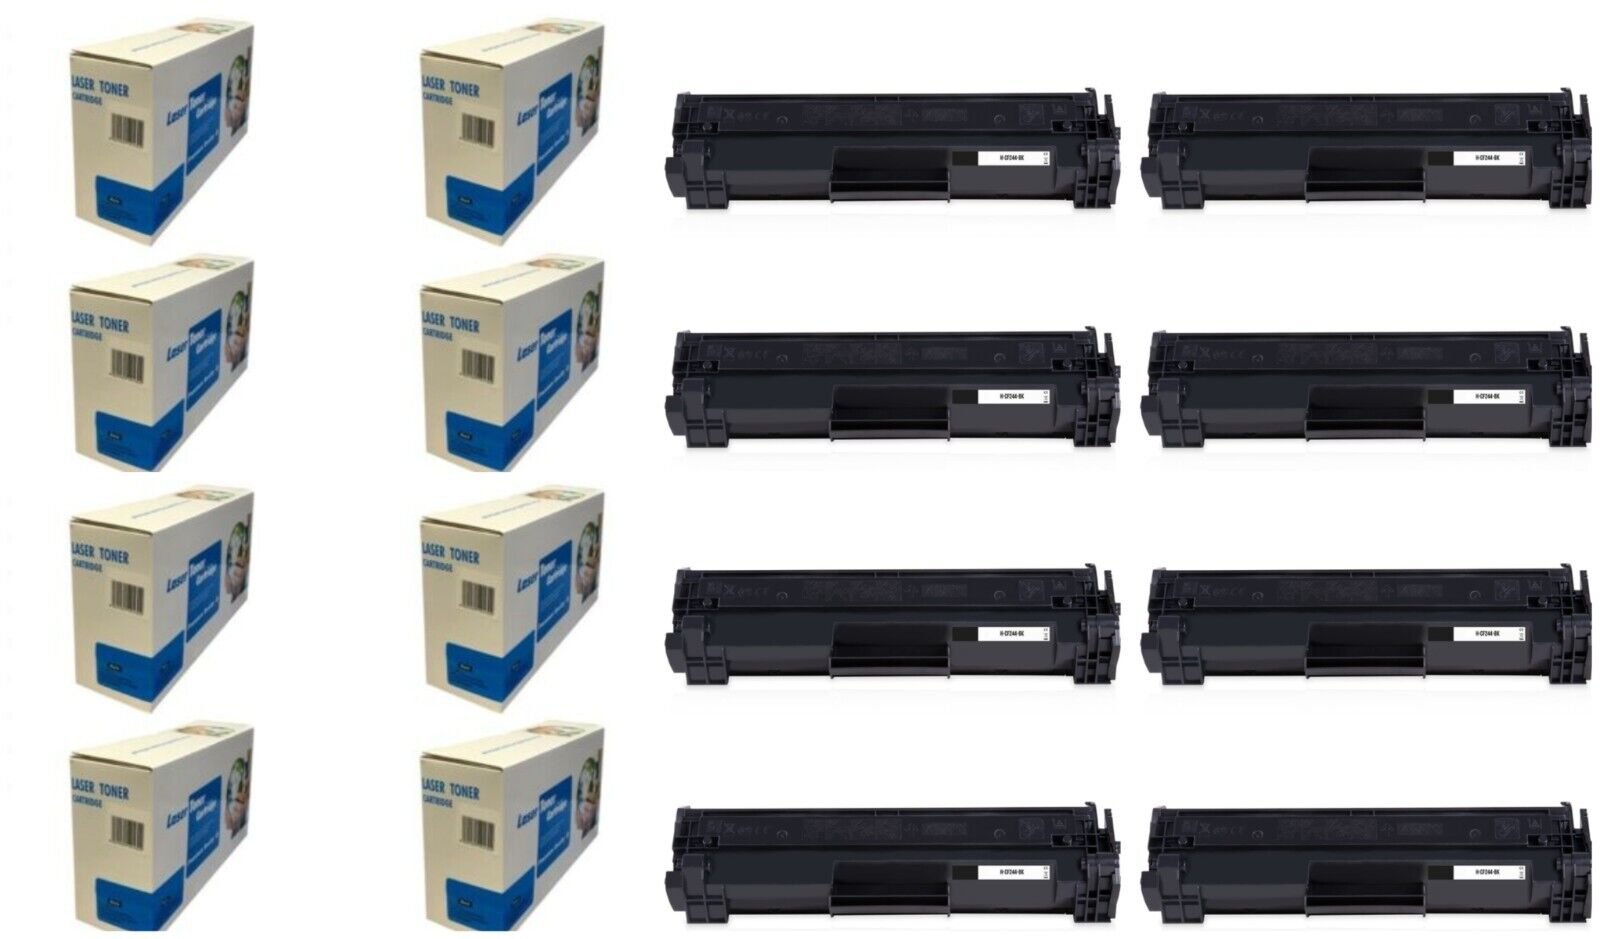 Toner for HP MFP M28w LaserJet Pro Printer 44A Cartridge Black Compatible 8 pk